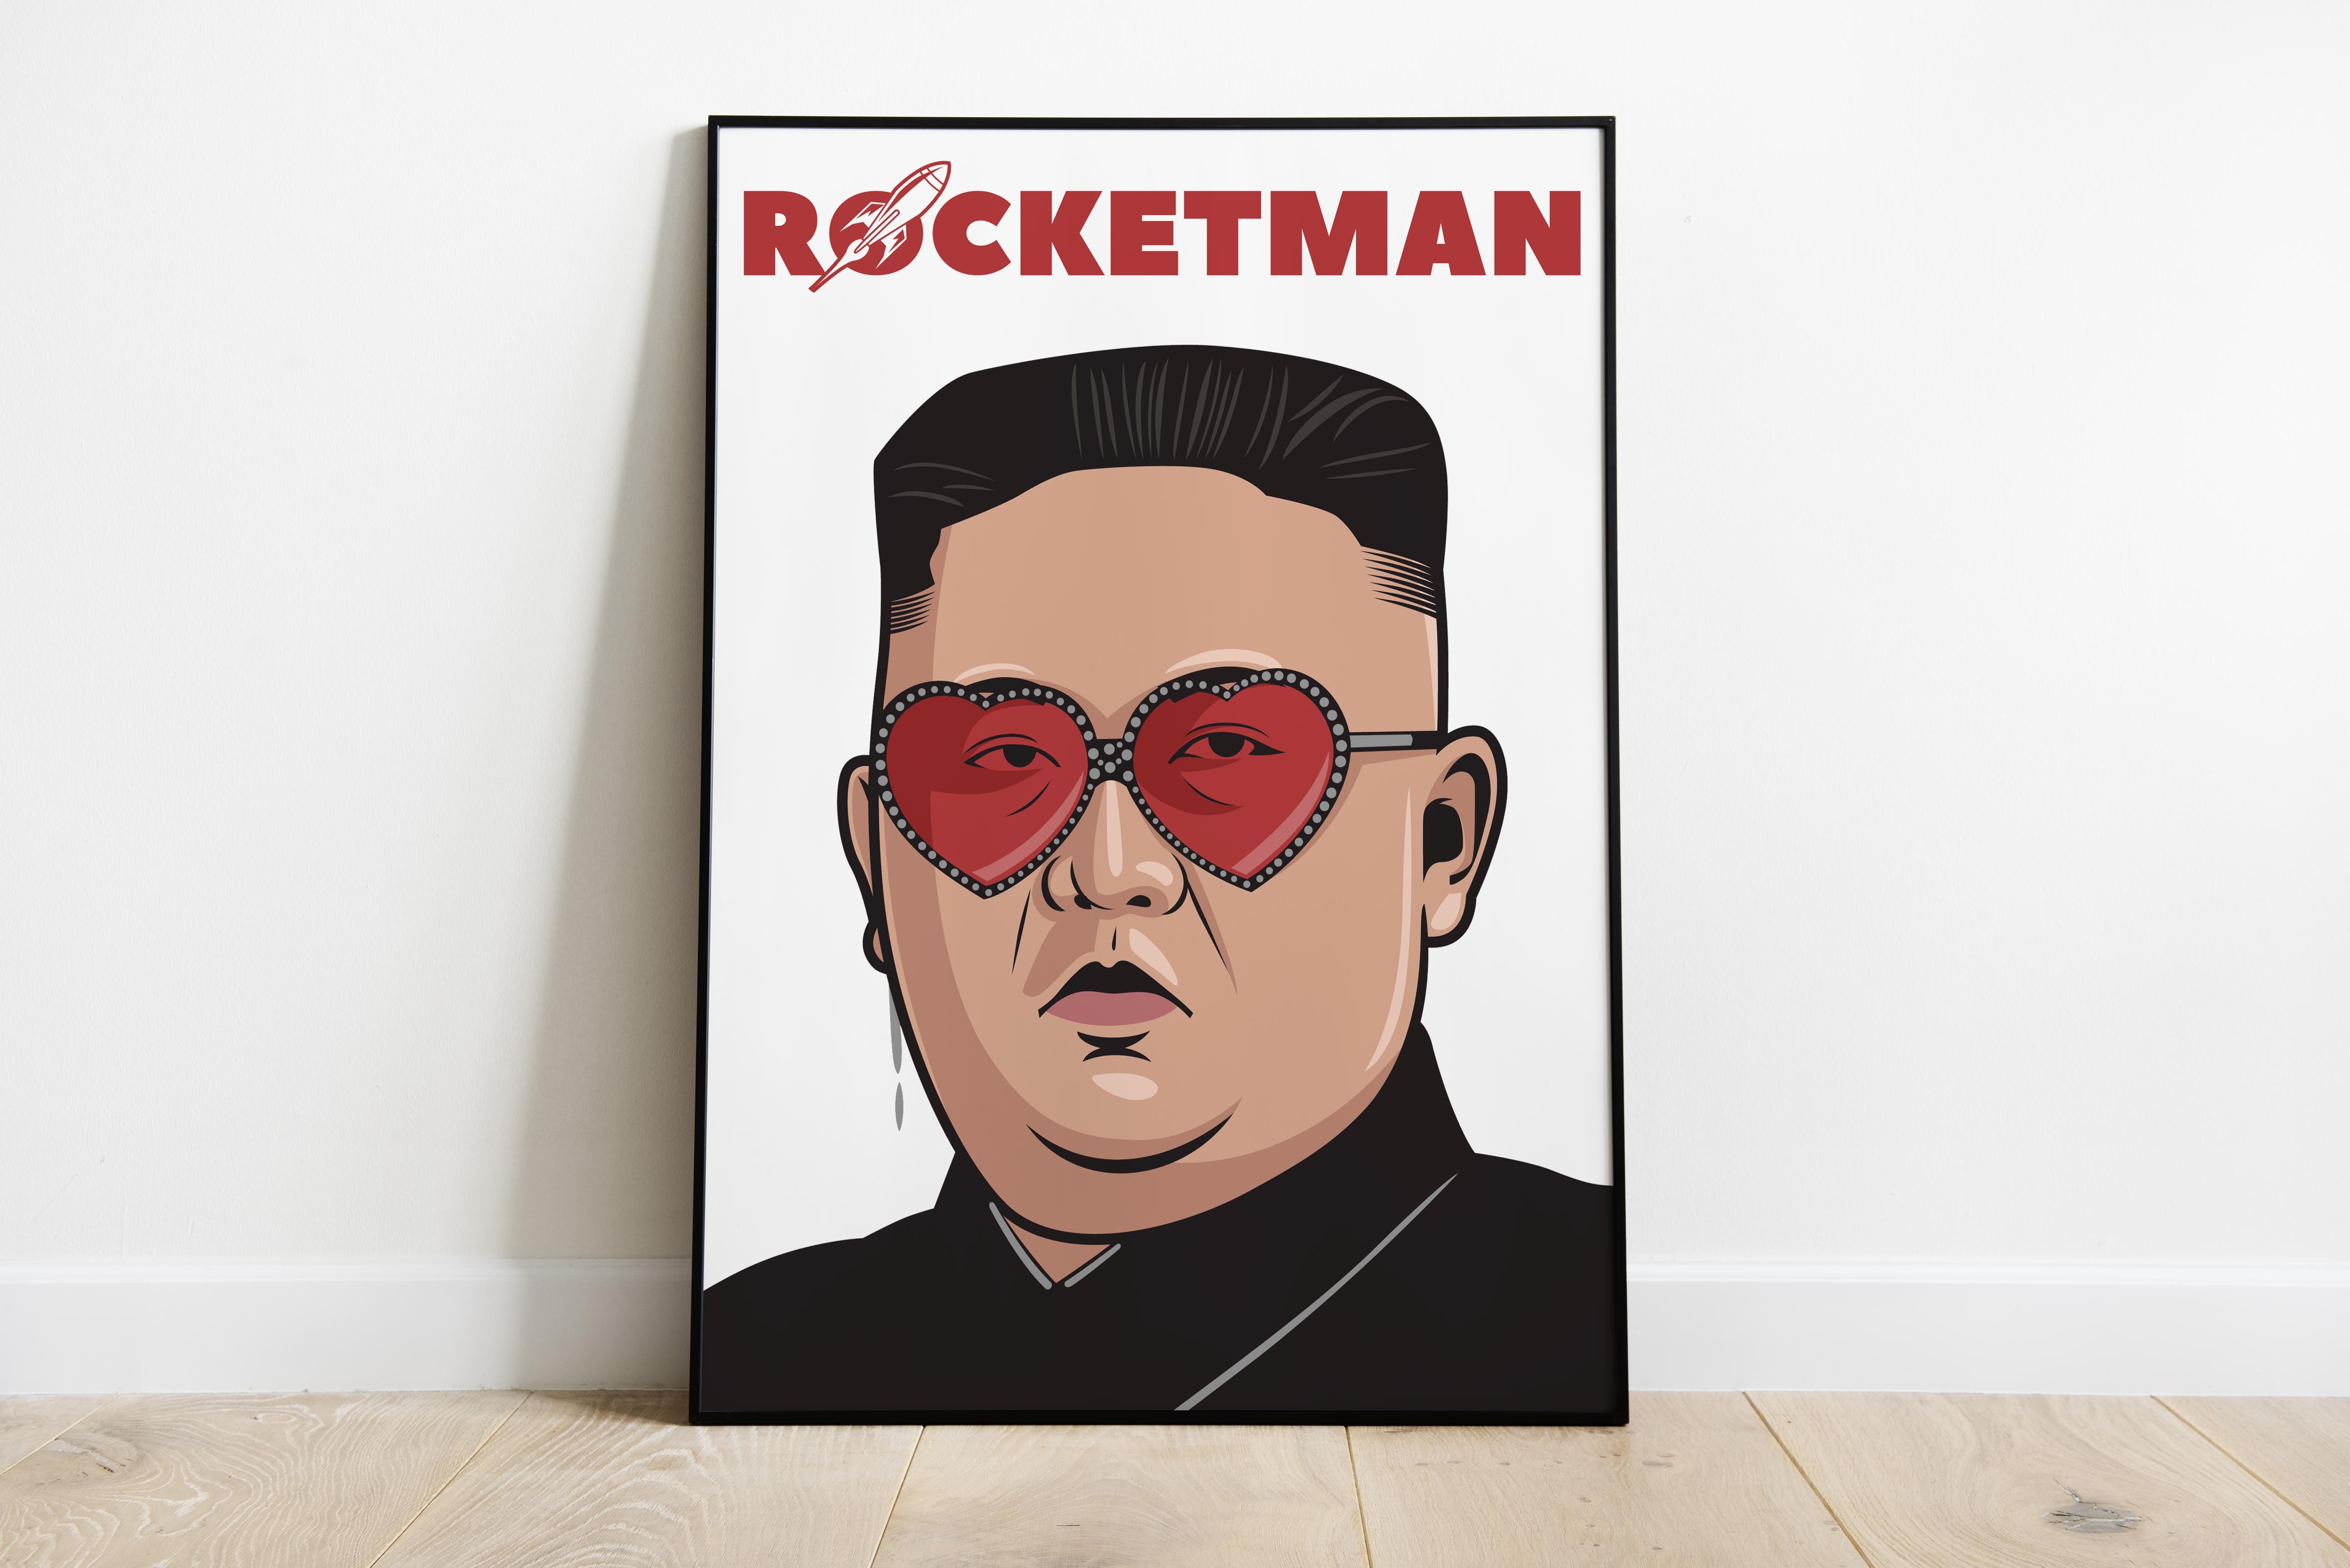 "Rocketman"